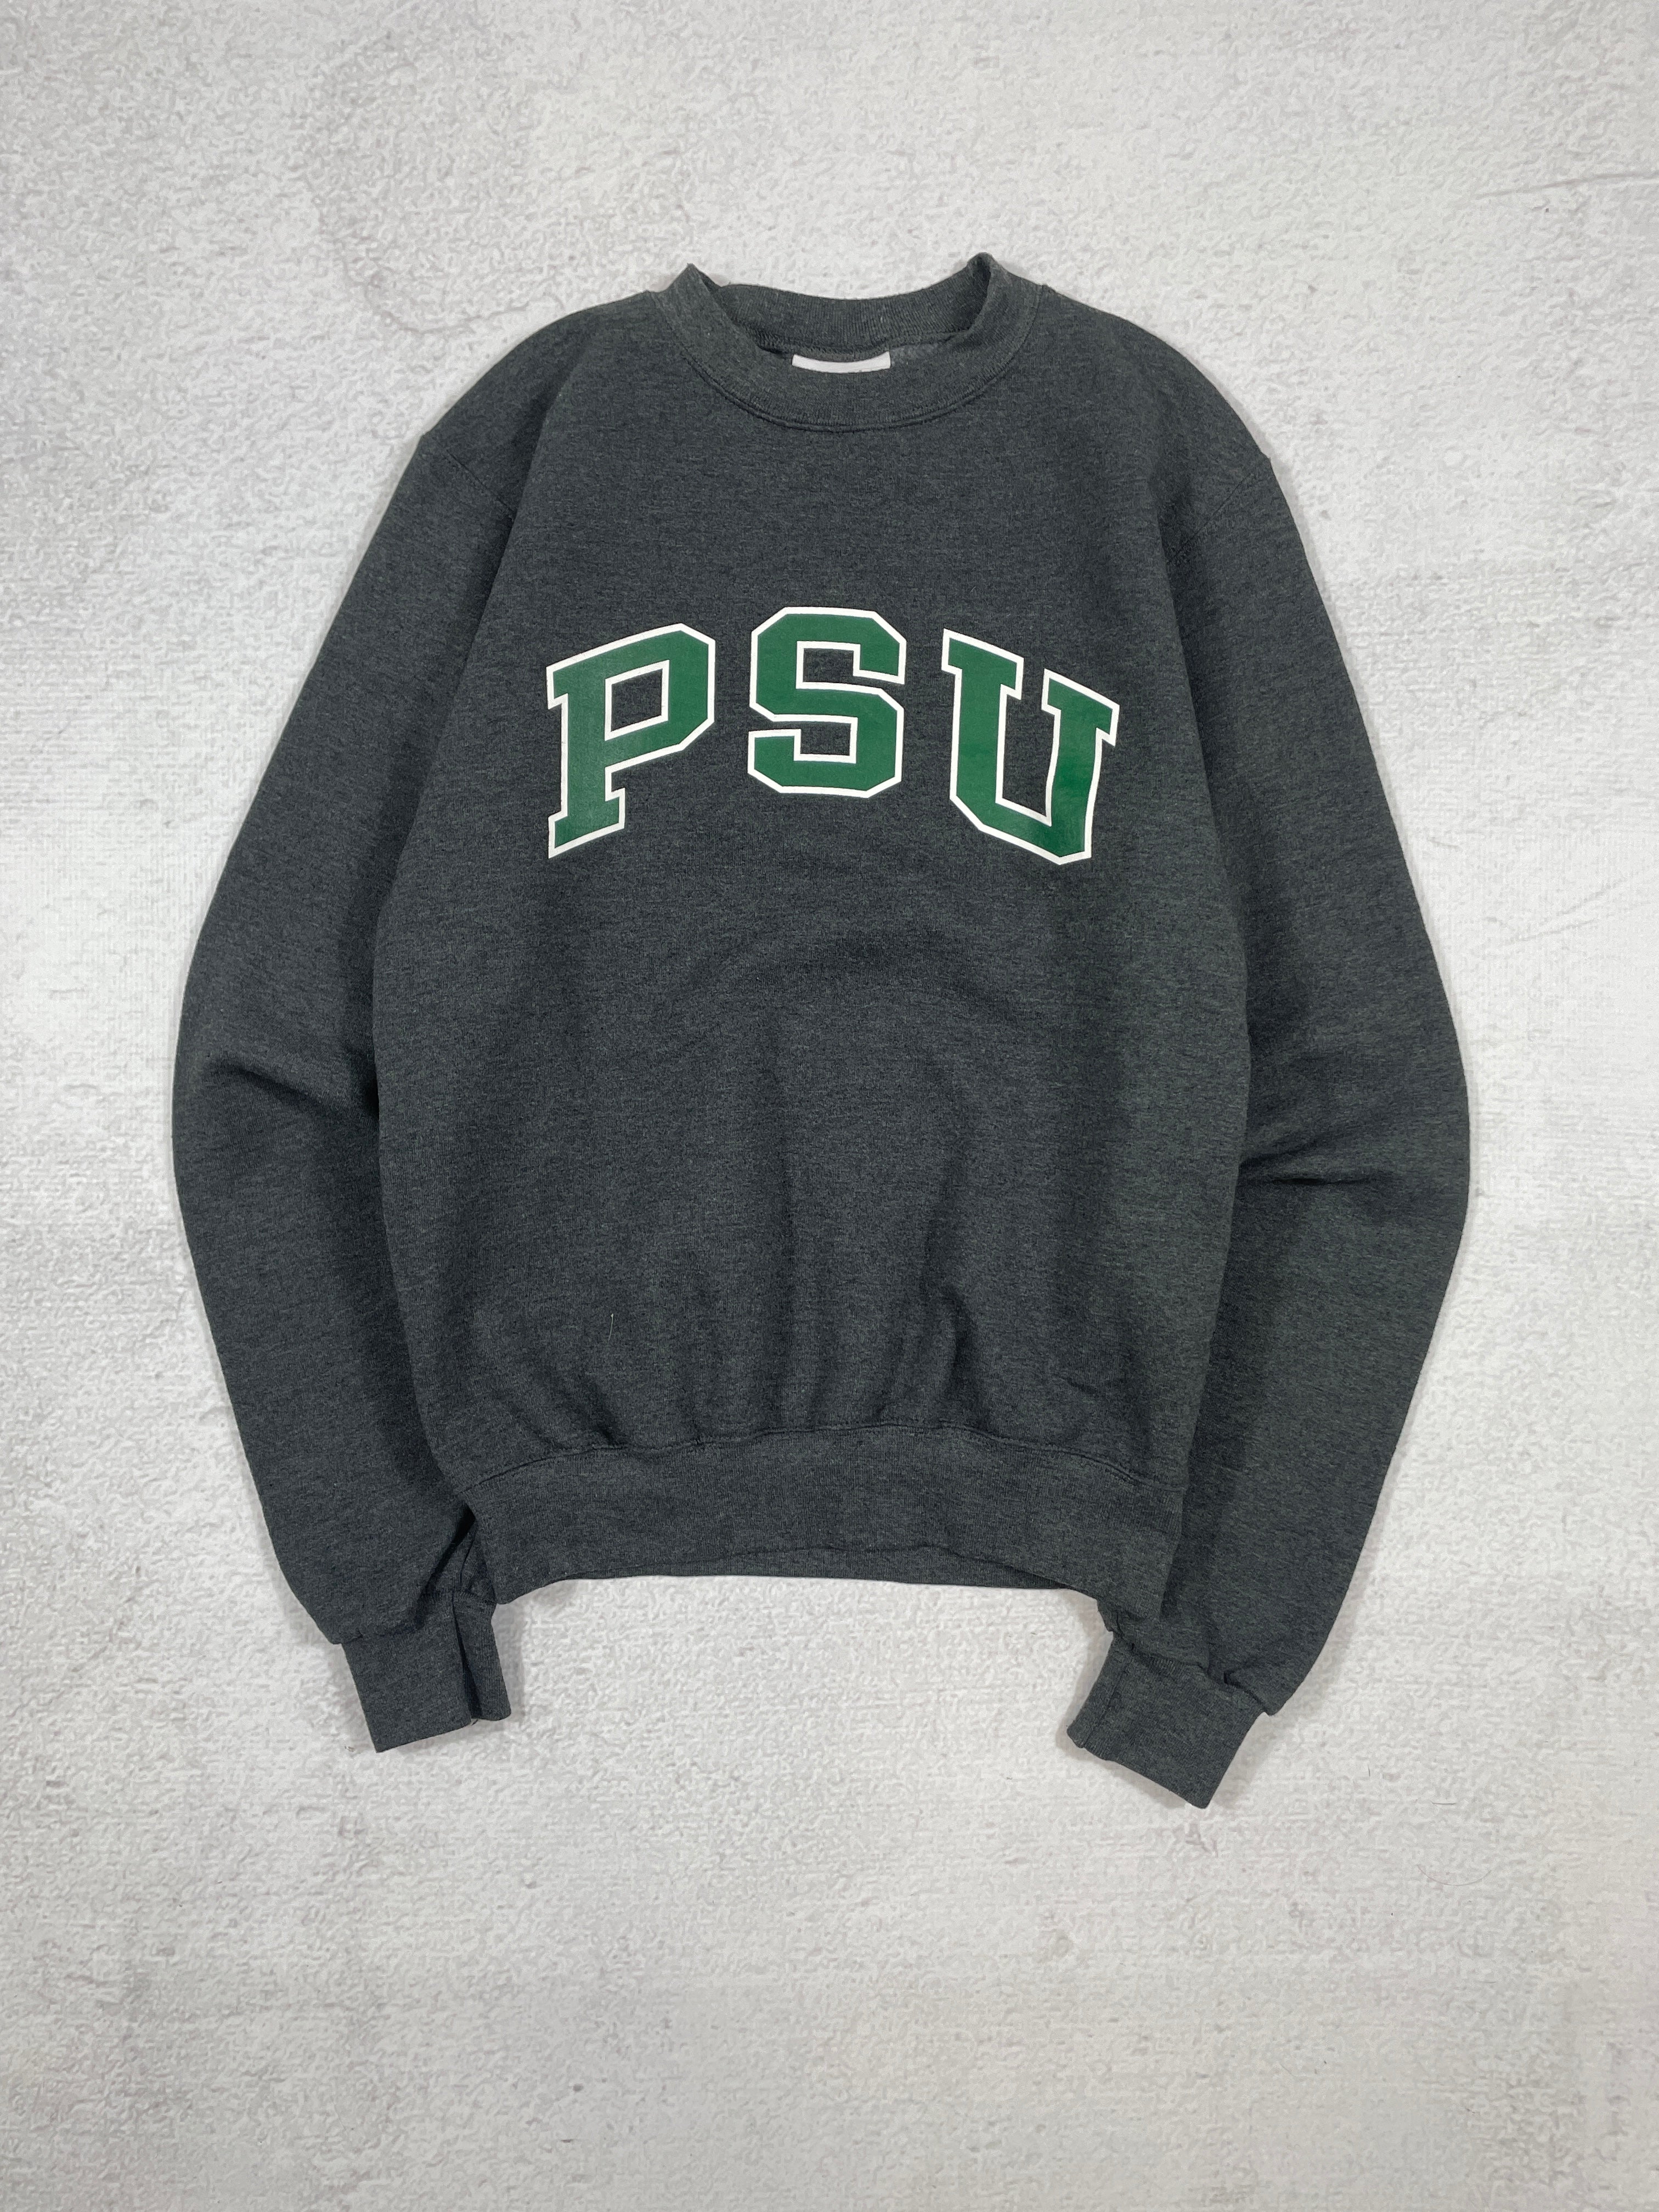 Vintage Champion Pennsylvania State University Crewneck Sweatshirt - Men's XS